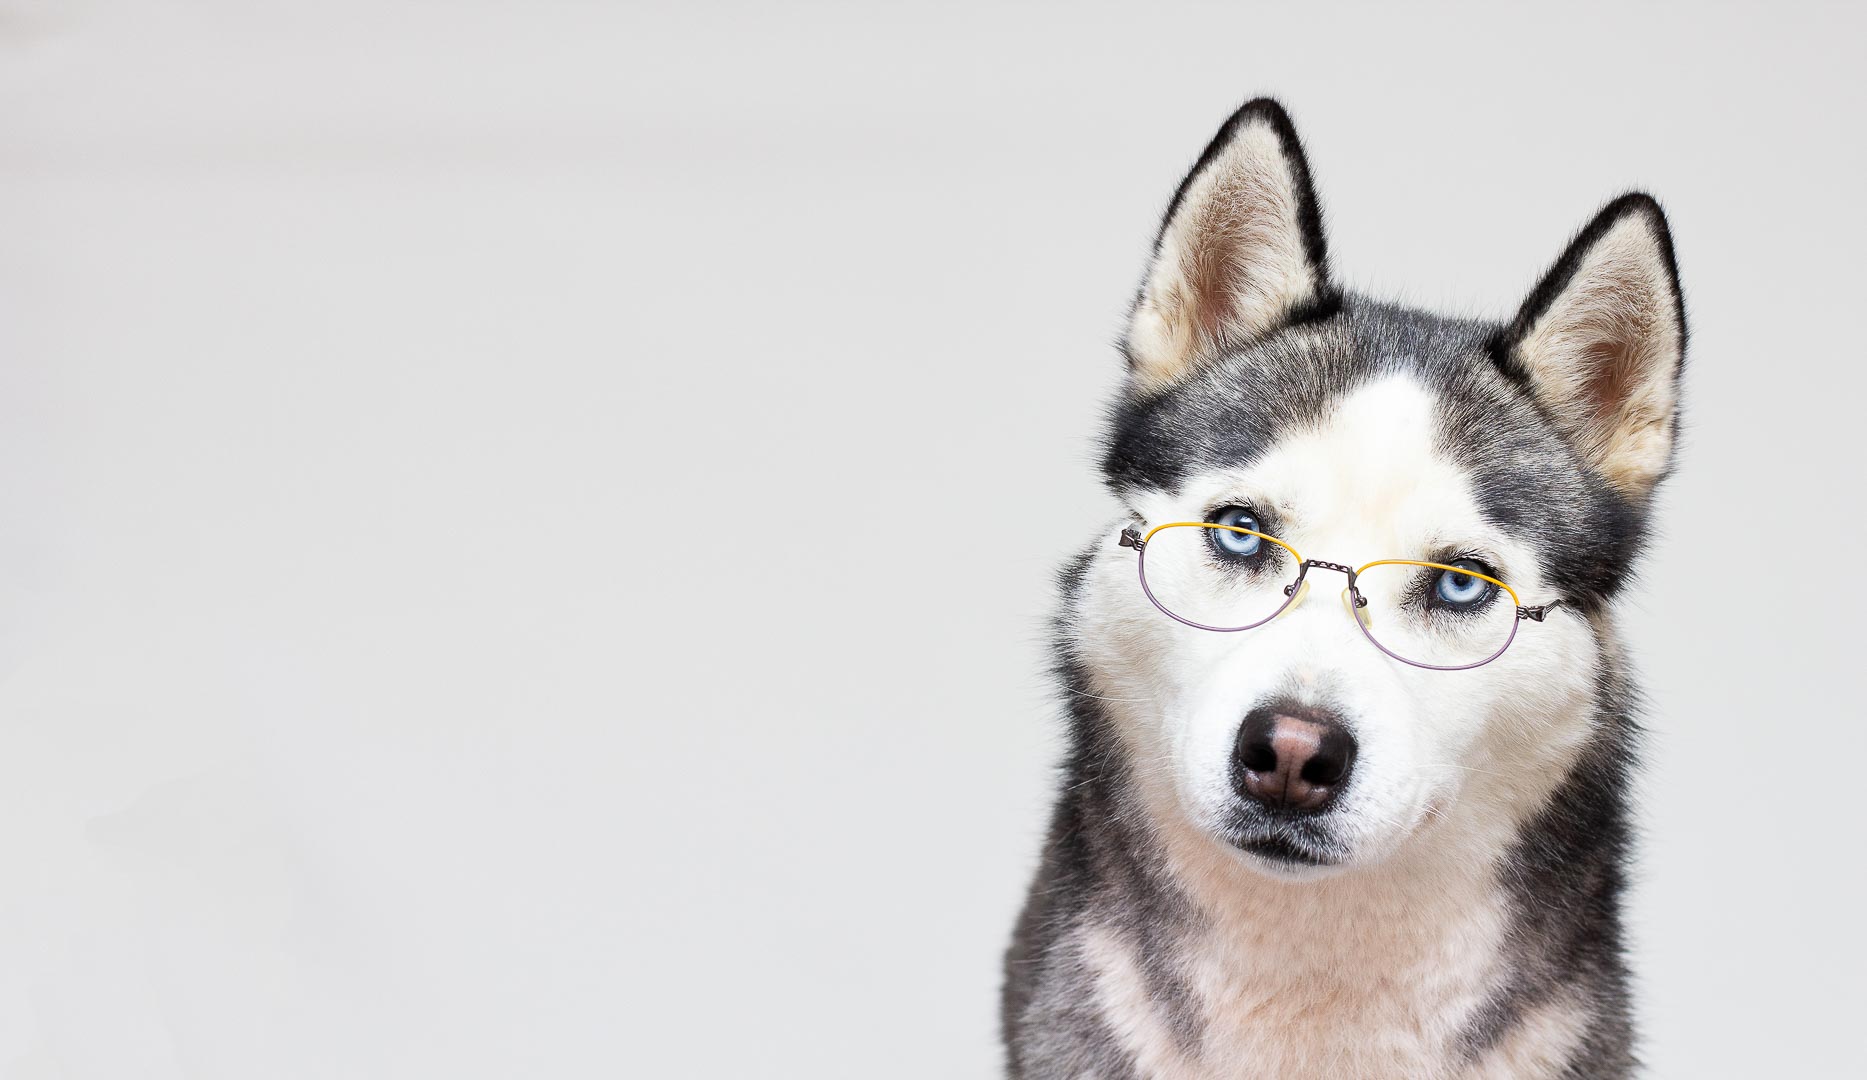 Siberian husky portrait in glasses on a grey background